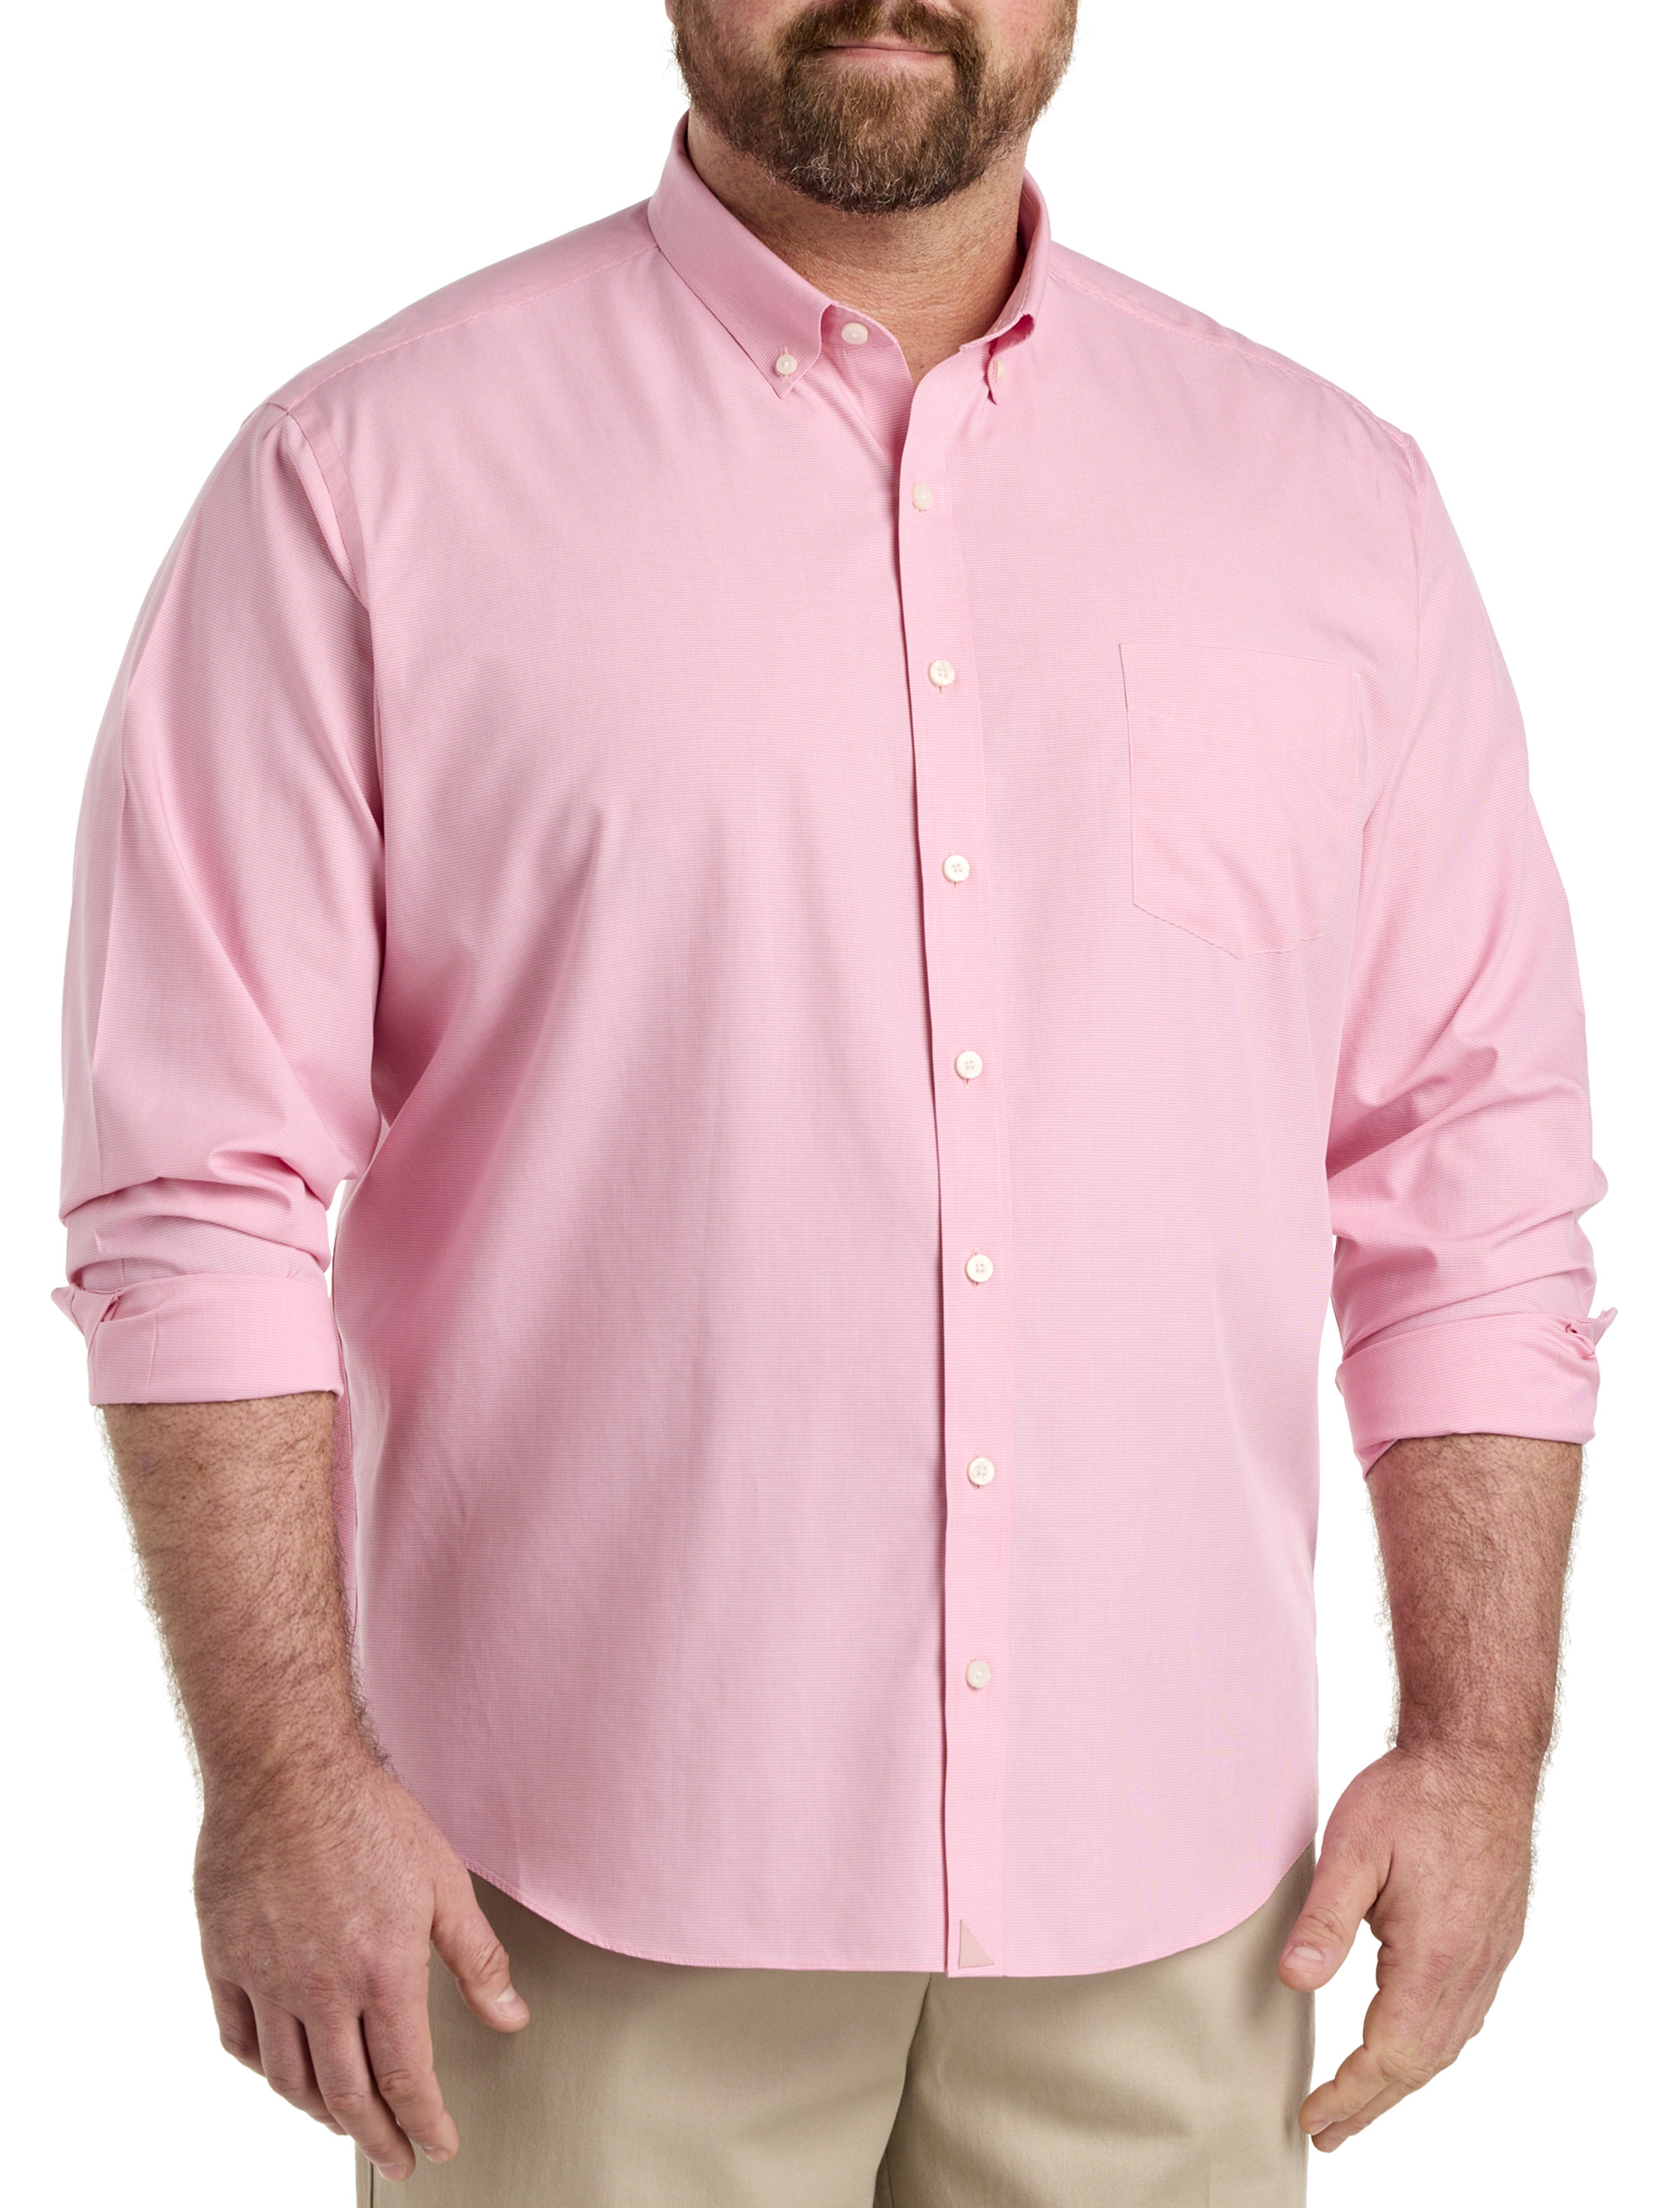 NAUTICA Mens Performance Deck Shirt Pink Classic Fit Button Down